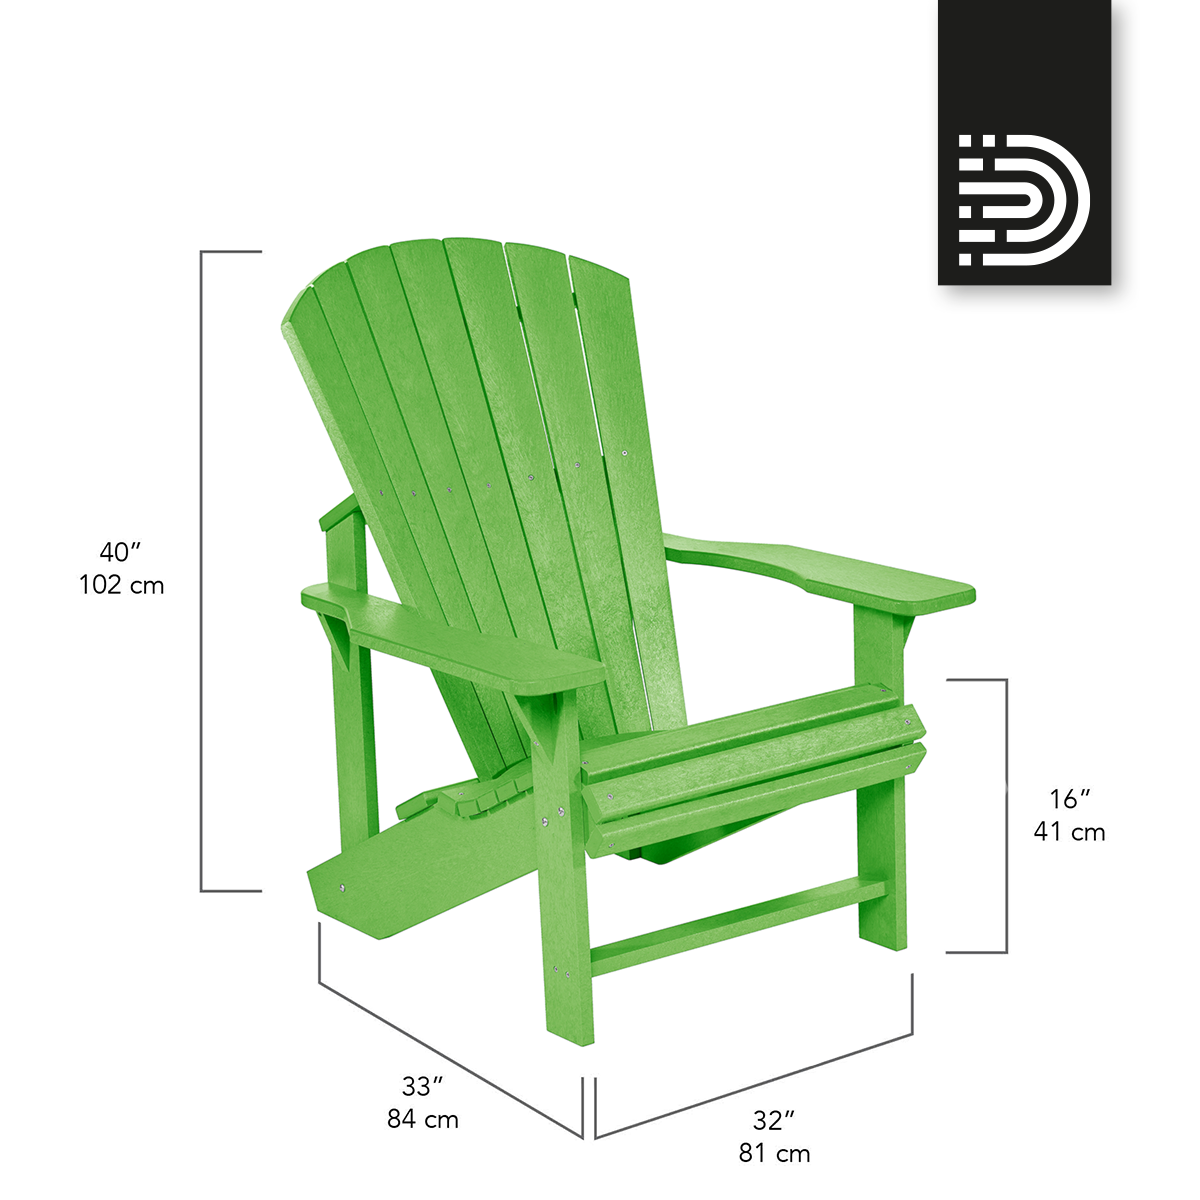  C01 Classic Adirondack Chair - kiwi green 17